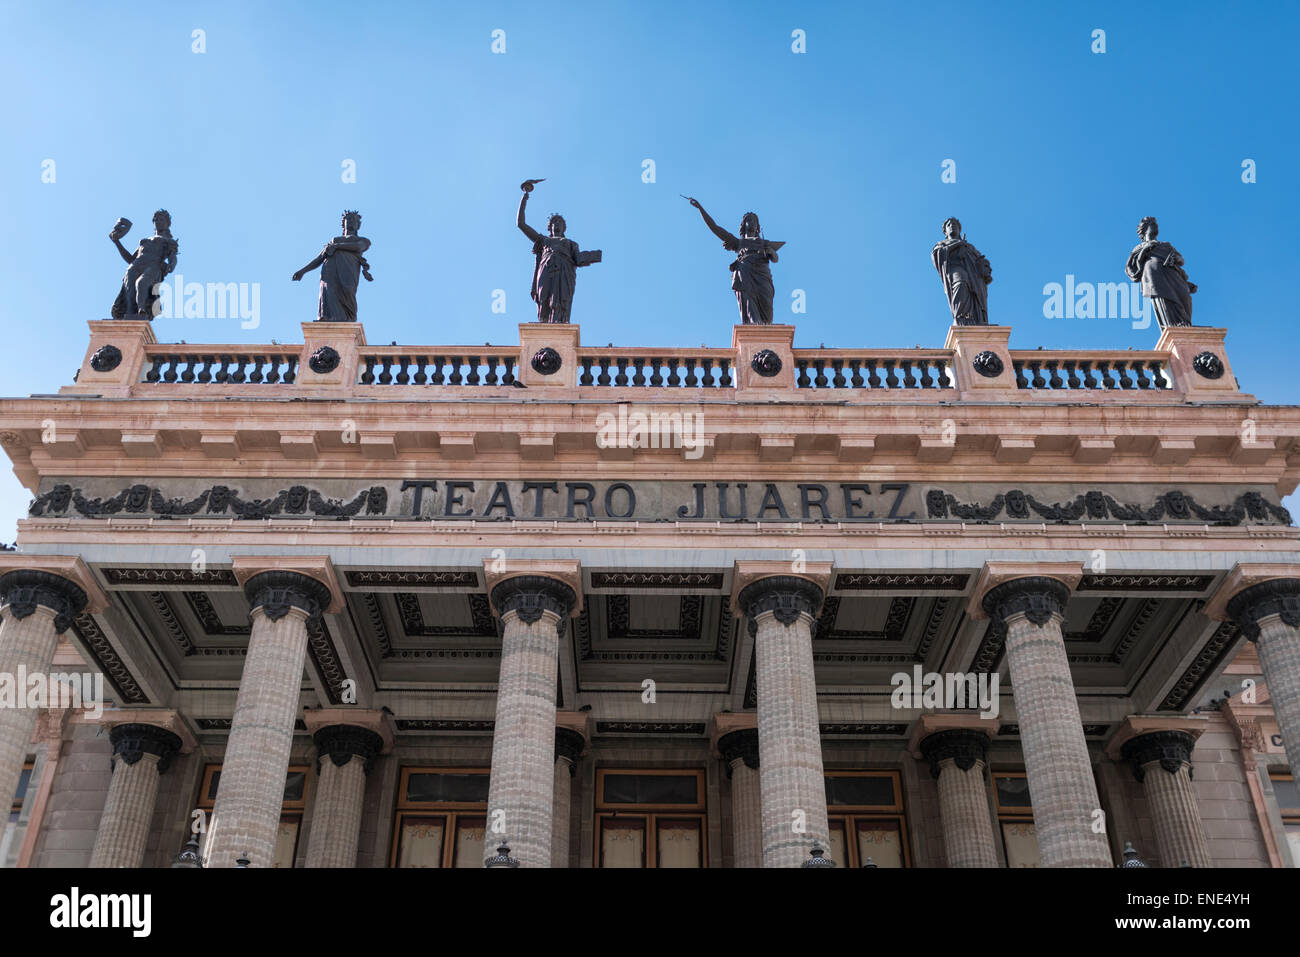 Exterior view of the Teatro Juarez building in Guanajuato Mexico Stock Photo